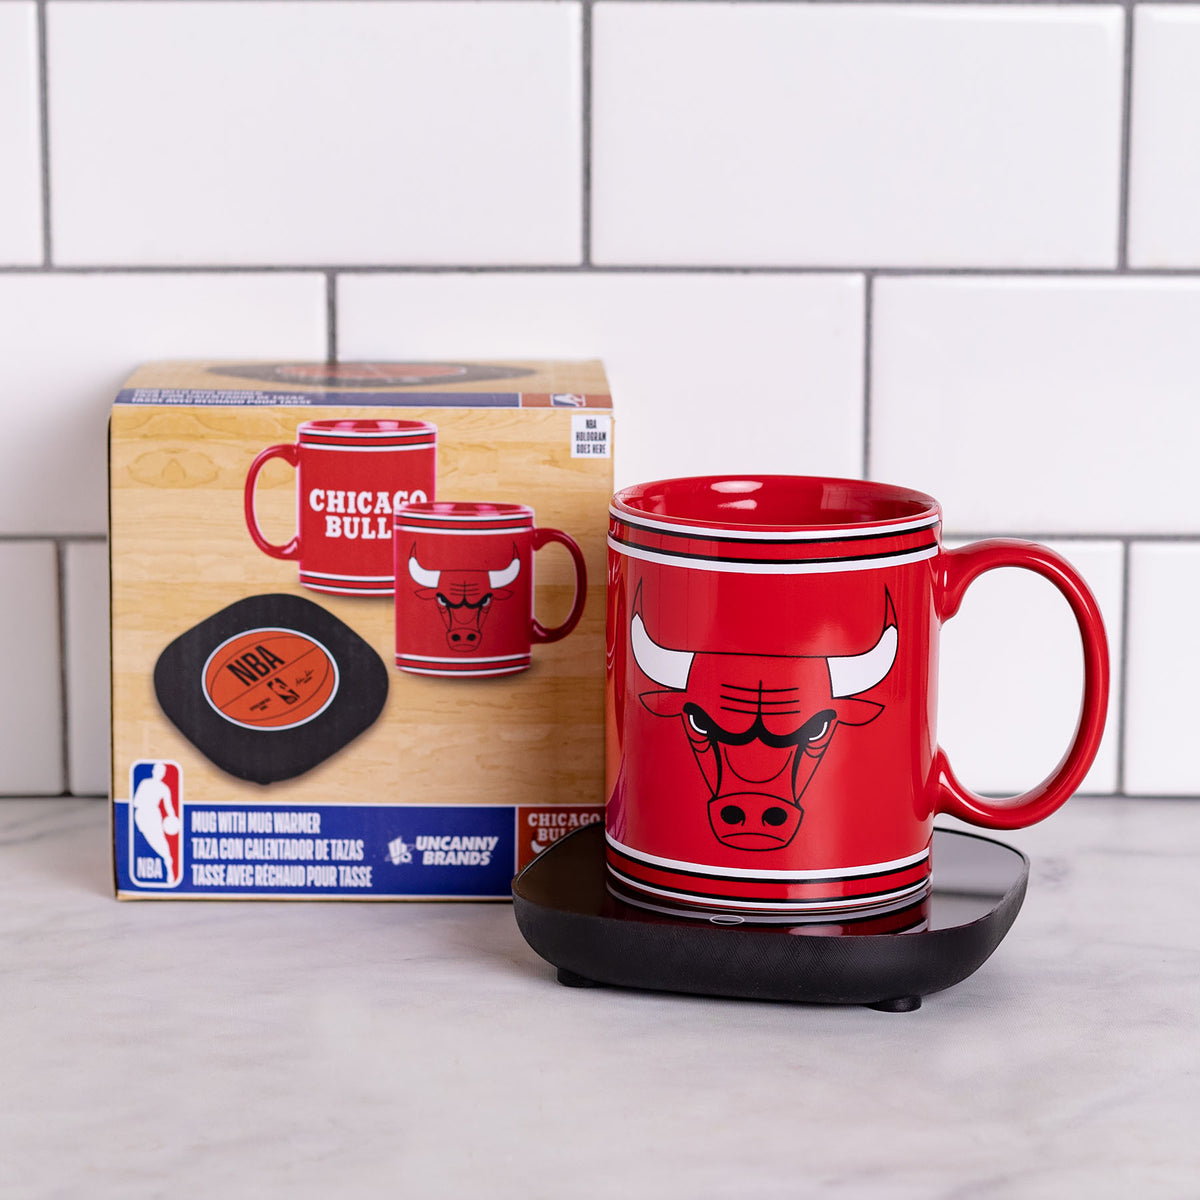 Uncanny Brands NBA Chicago Bulls Logo Mug Warmer with Mug – Keeps Your  Favorite Beverage Warm - Auto Shut On/Off